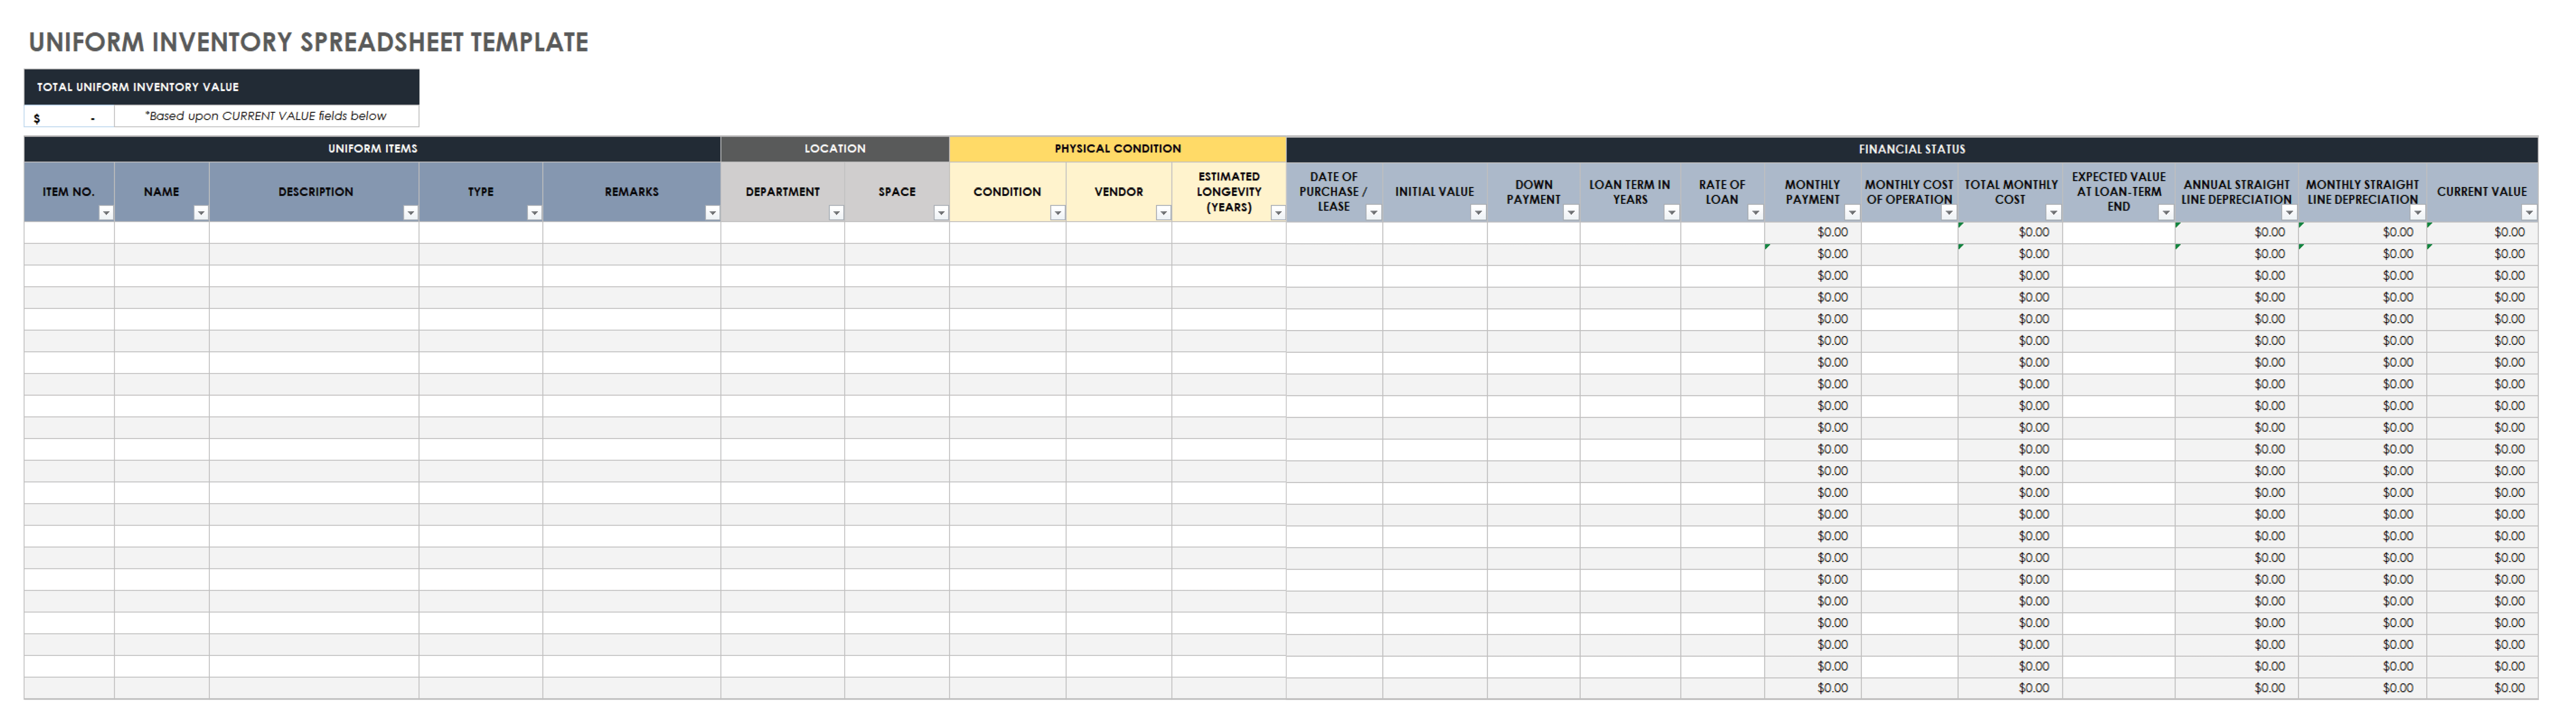 editable-spreadsheet-uniform-log-sheet-inventory-franklin-high-free-inventory-log-sheet-t-riset